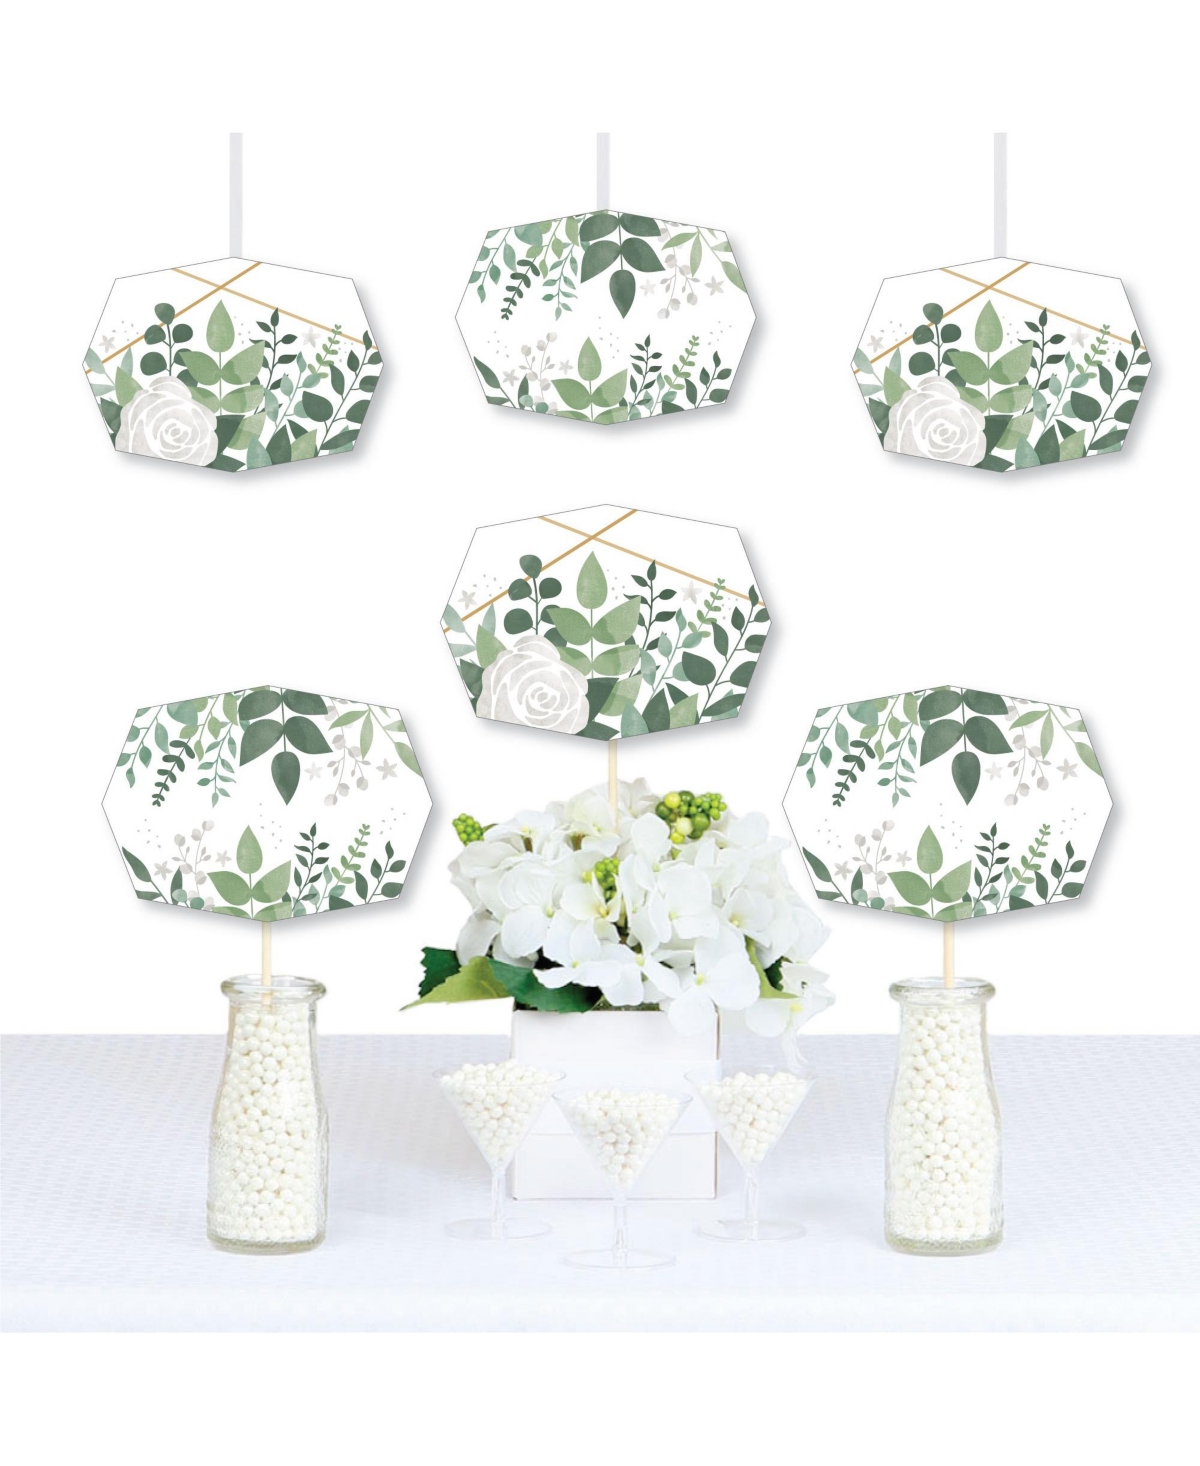 Boho Botanical - Shape Decorations Diy Greenery Party Essentials - Set of 20